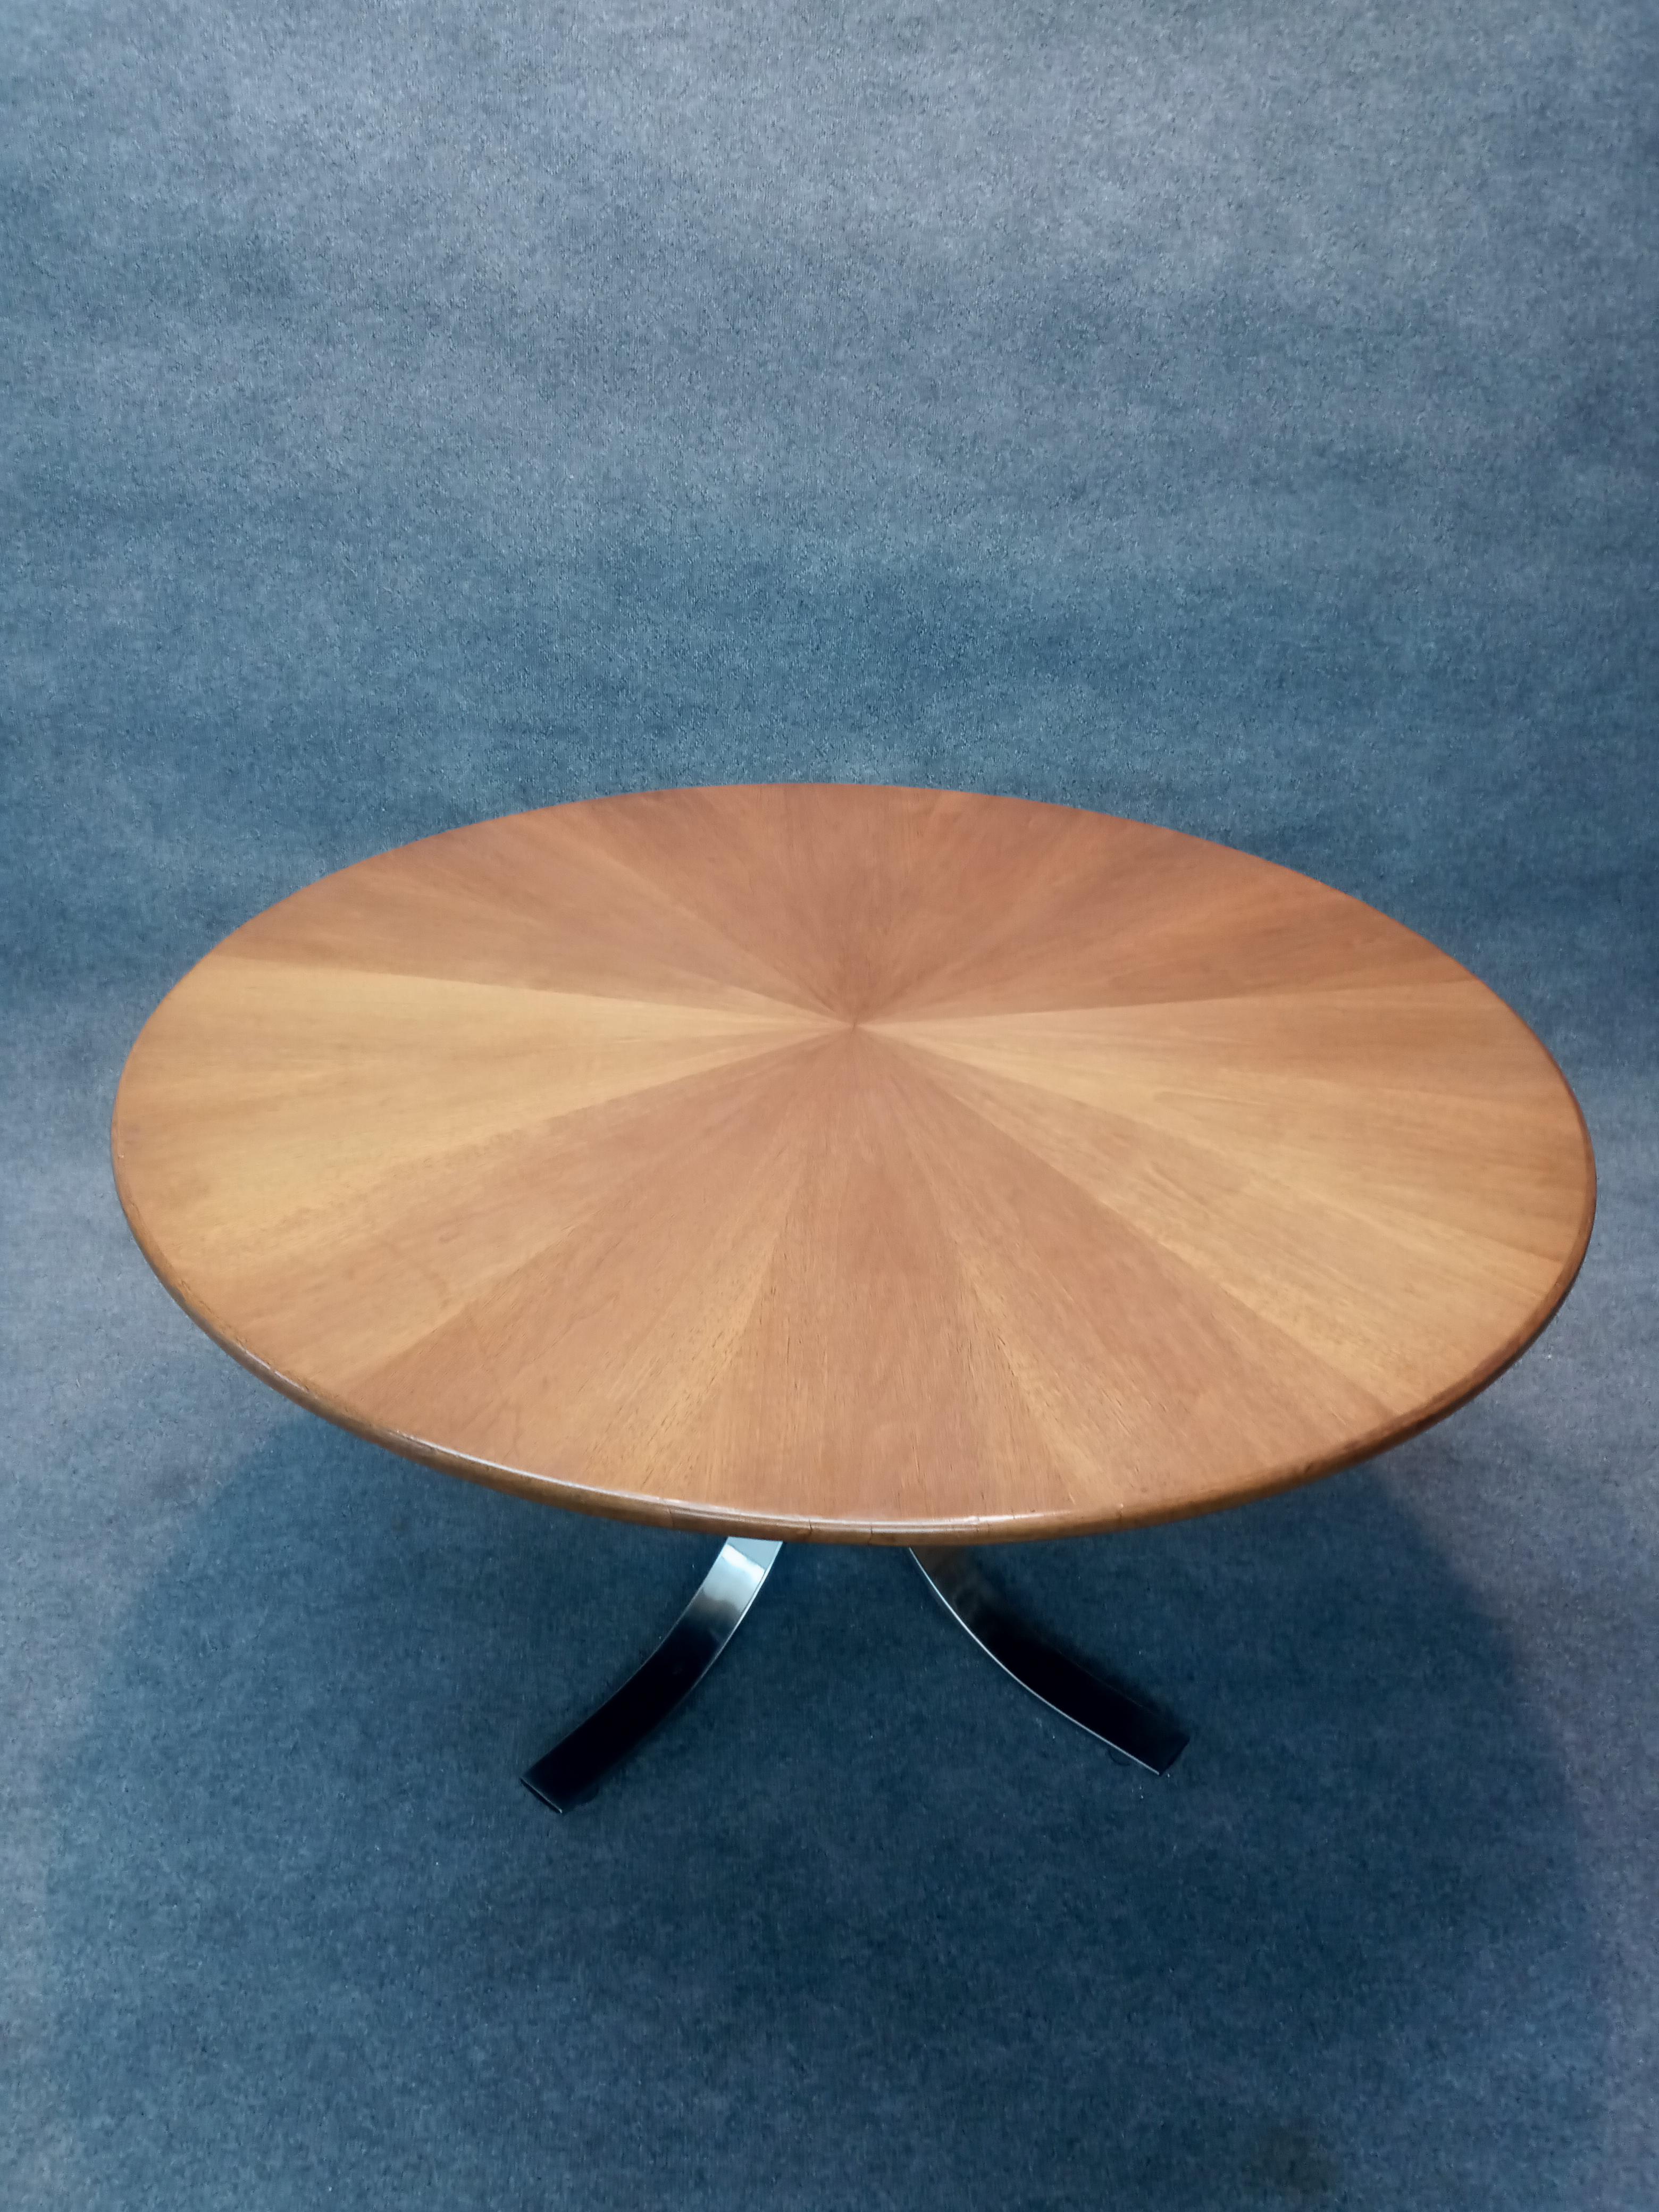 Osvaldo Bersani Large Walnut & Stainless Steel Round Dining Table, c. 1970s 2